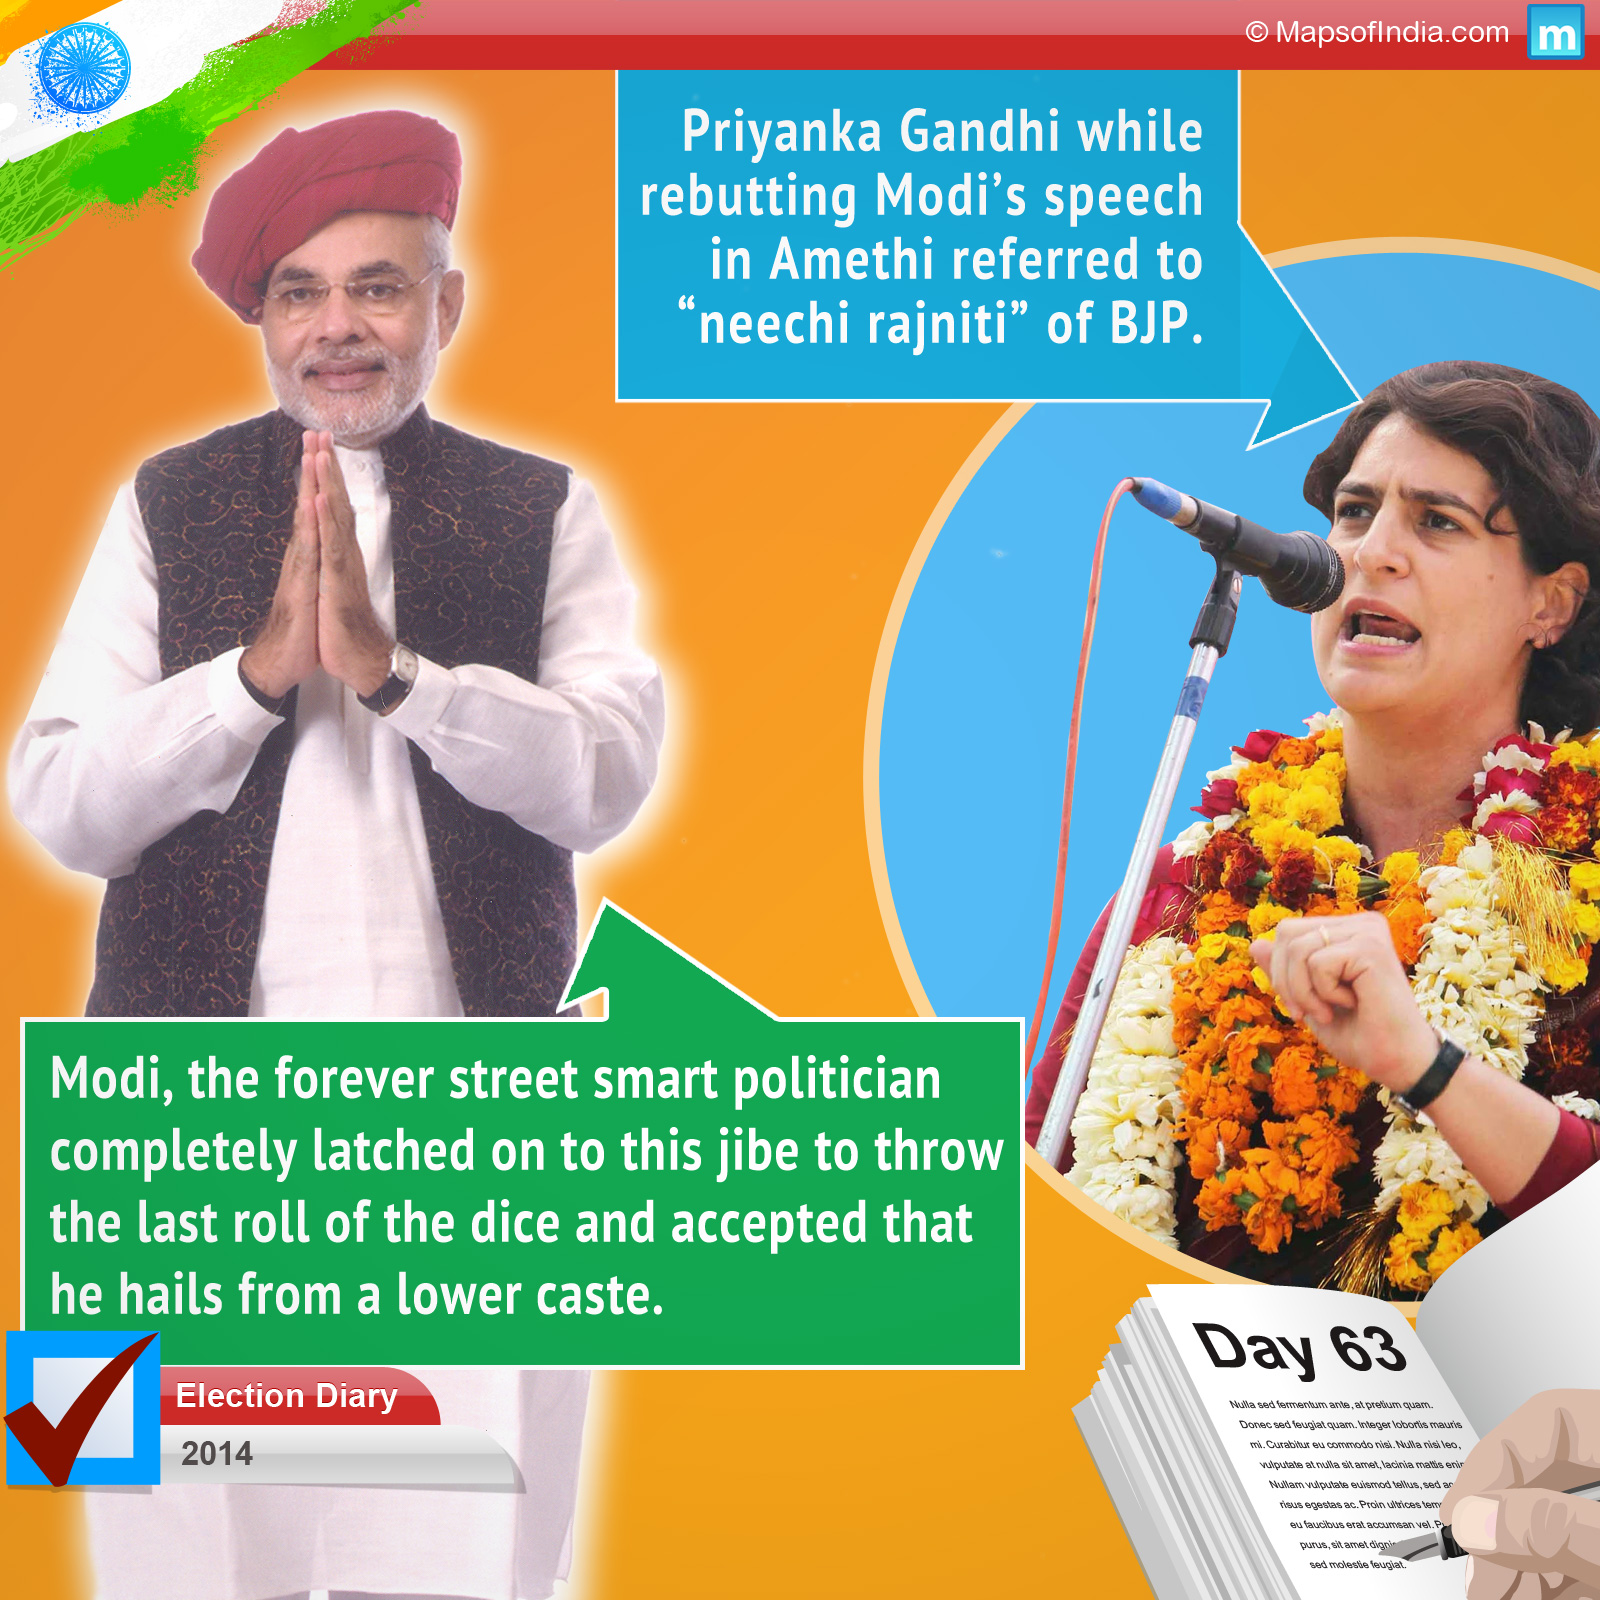 Priyanka Gandhi while rebutting Modi’s speech in Amethi had referred to “neechi rajniti” of BJP